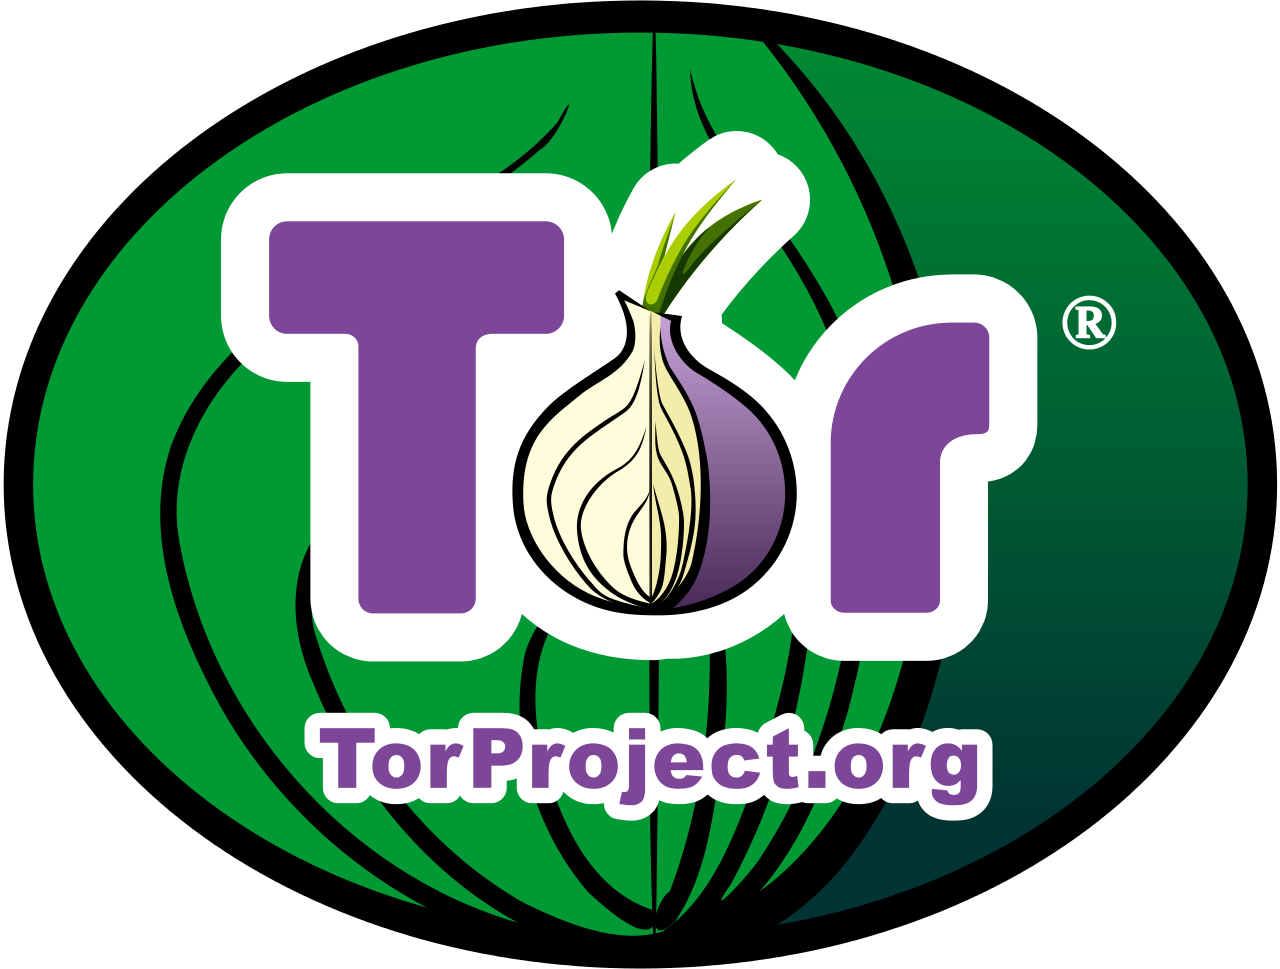 File:Tor-logo-2011-sticker.svg - Wikimedia Commons